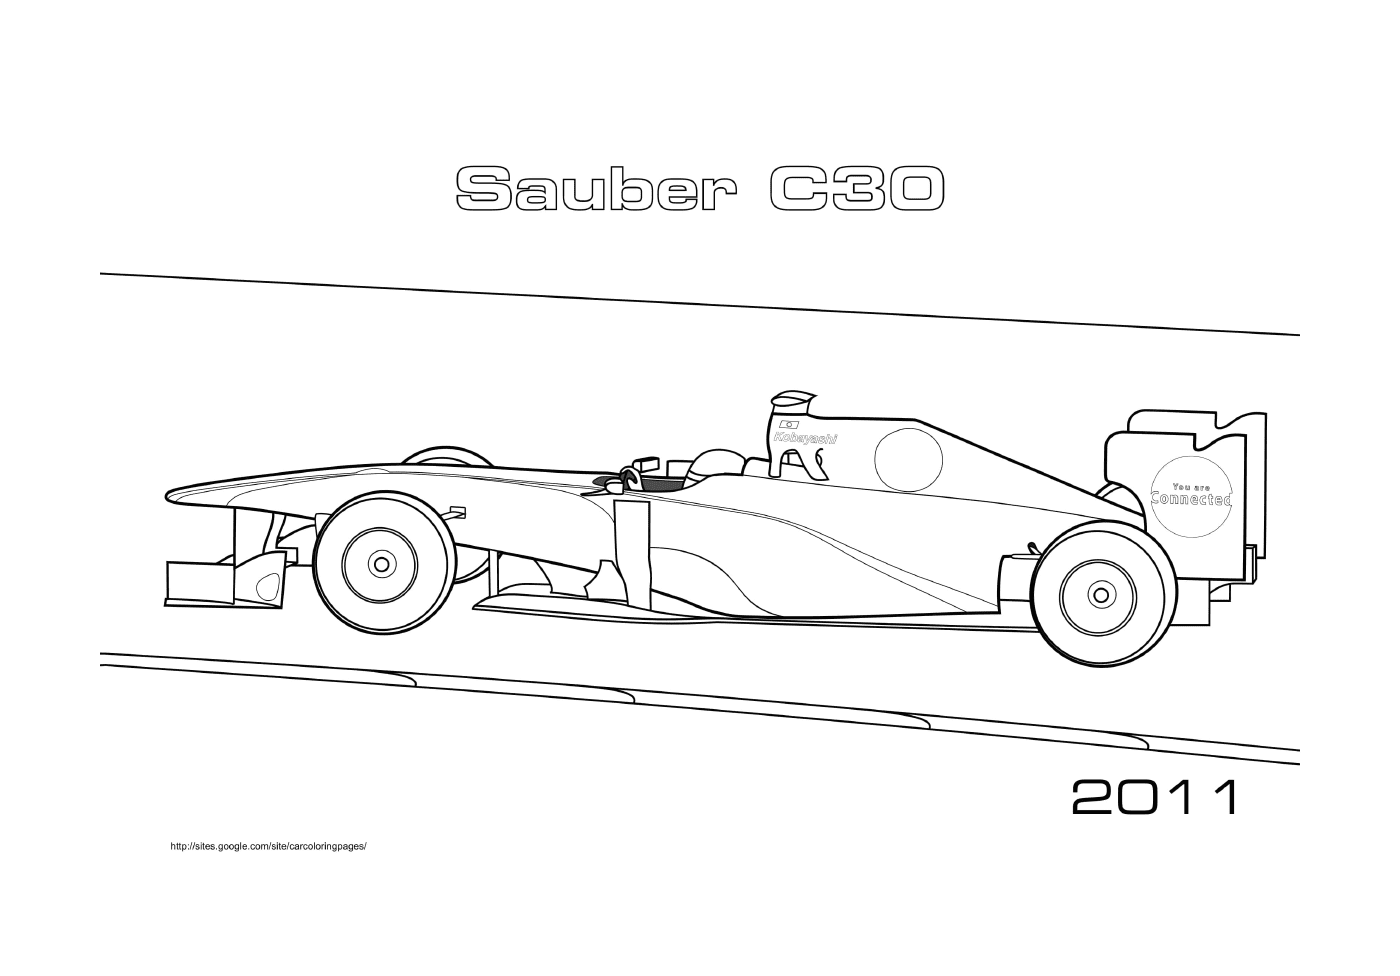  Sauber C30 2011 racing car 